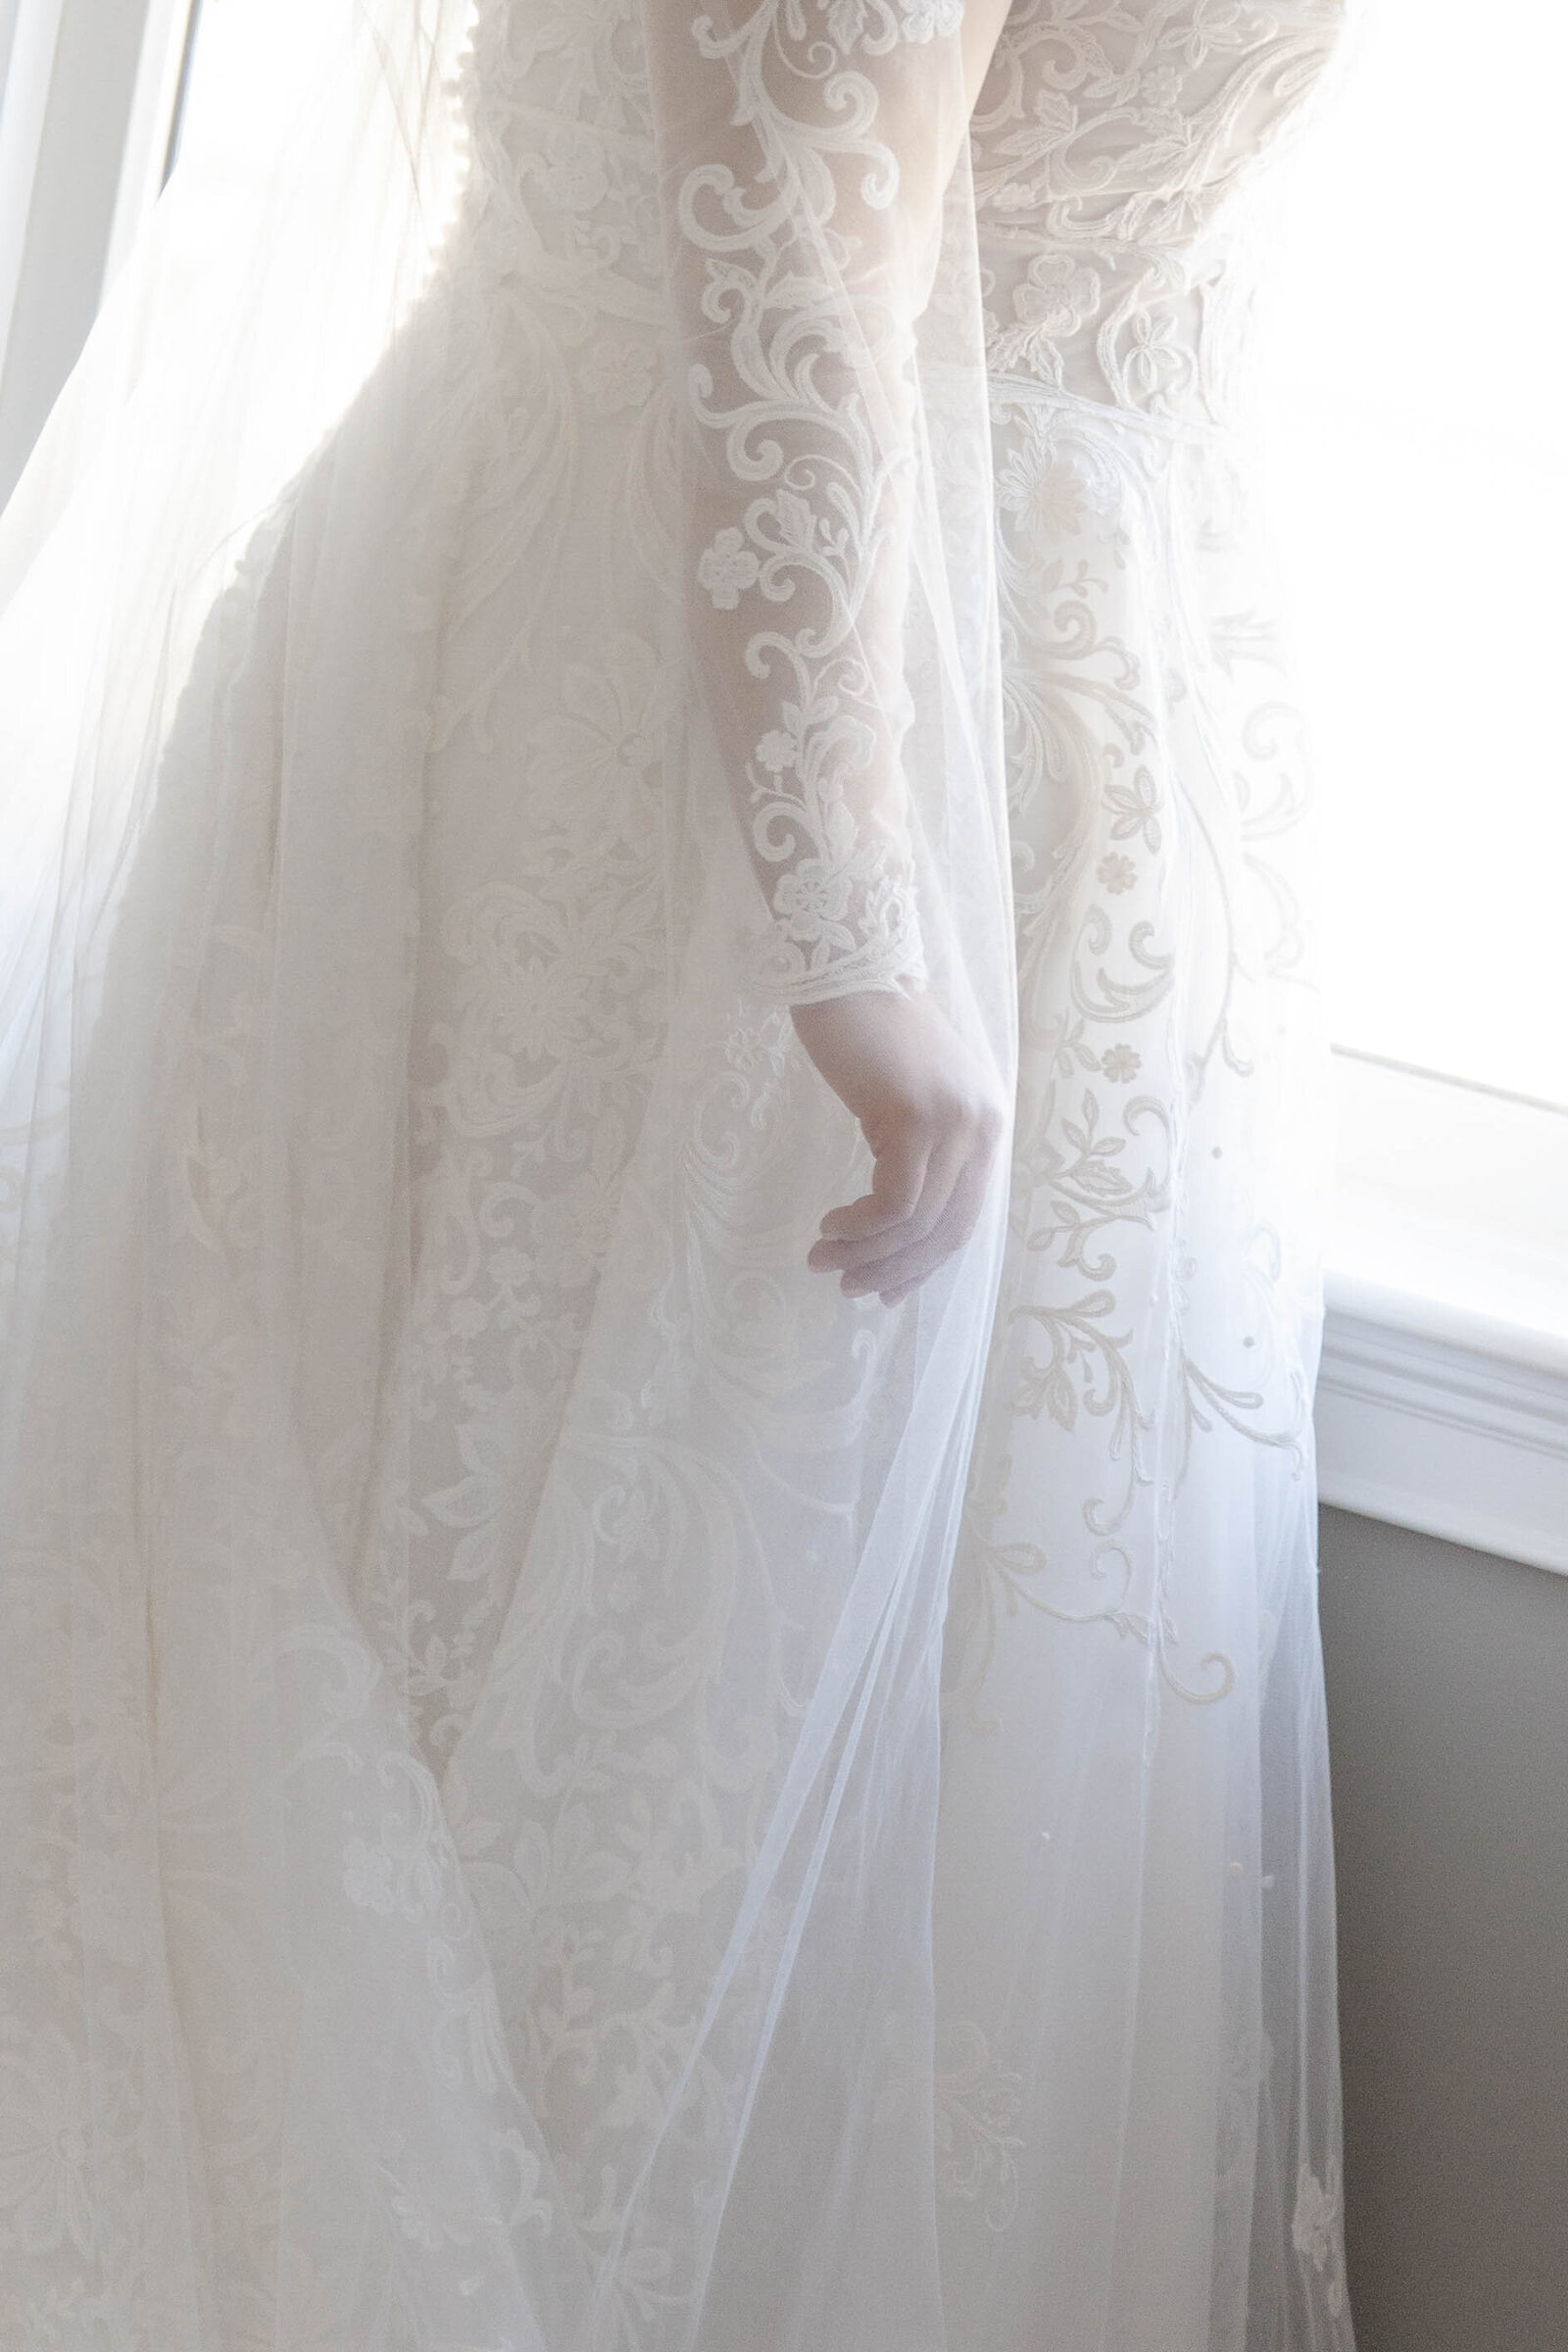 New-England-Wedding-Photographer-Sabrina-Scolari007